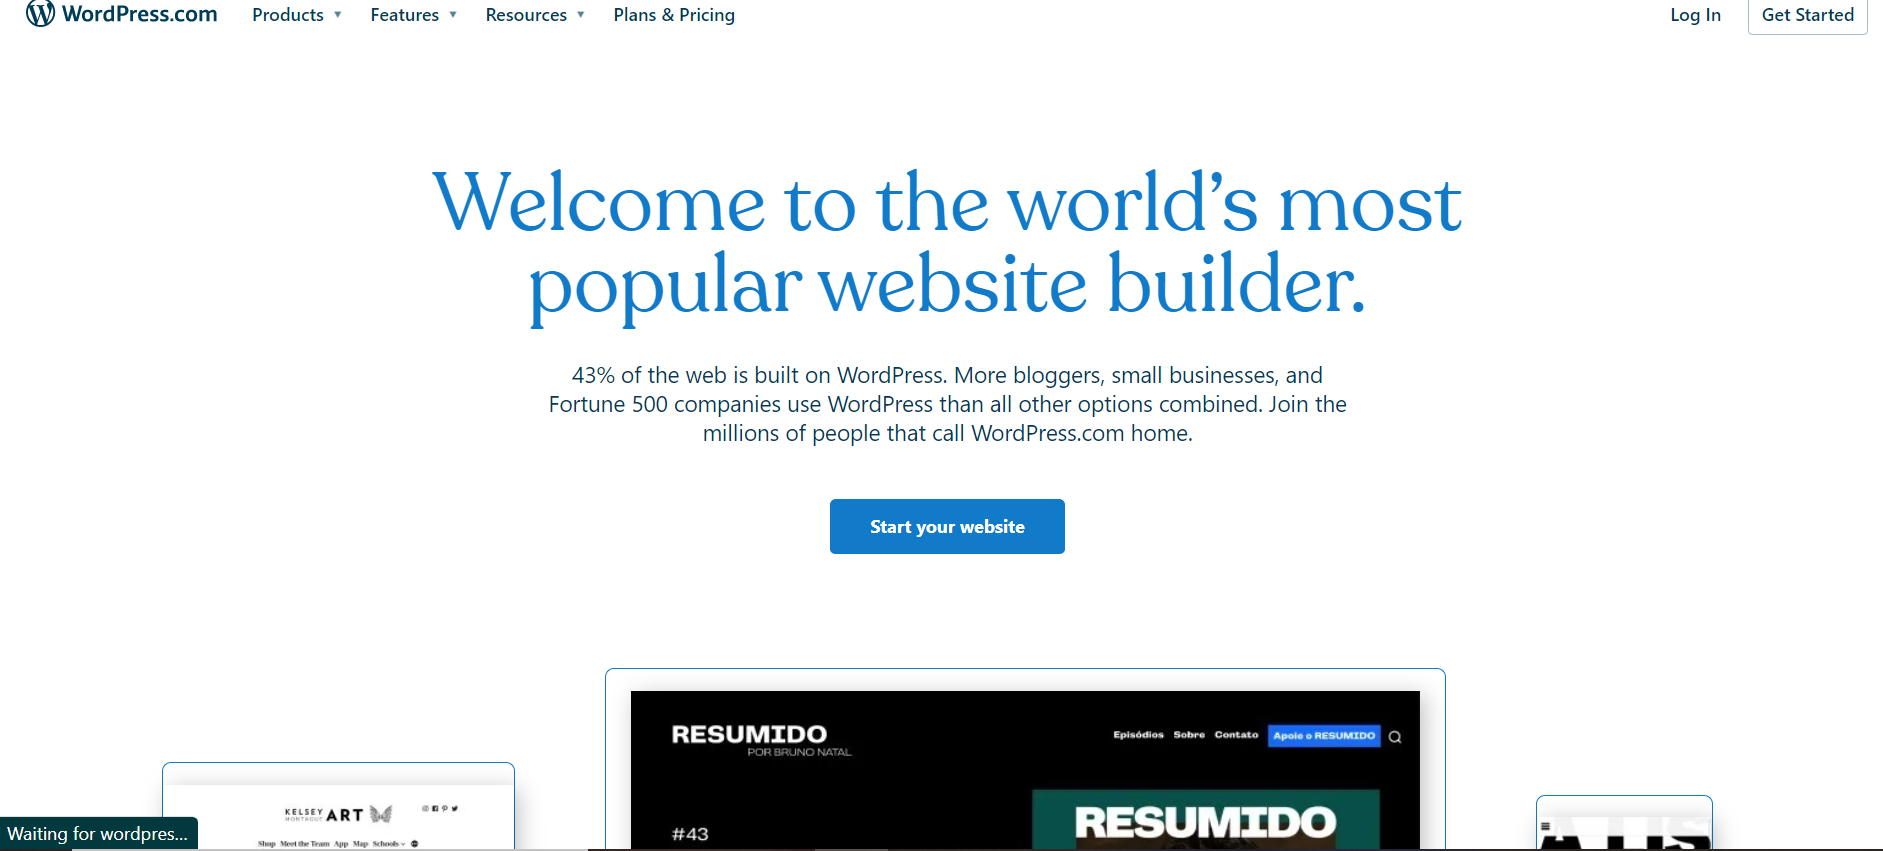 Most popular website builder